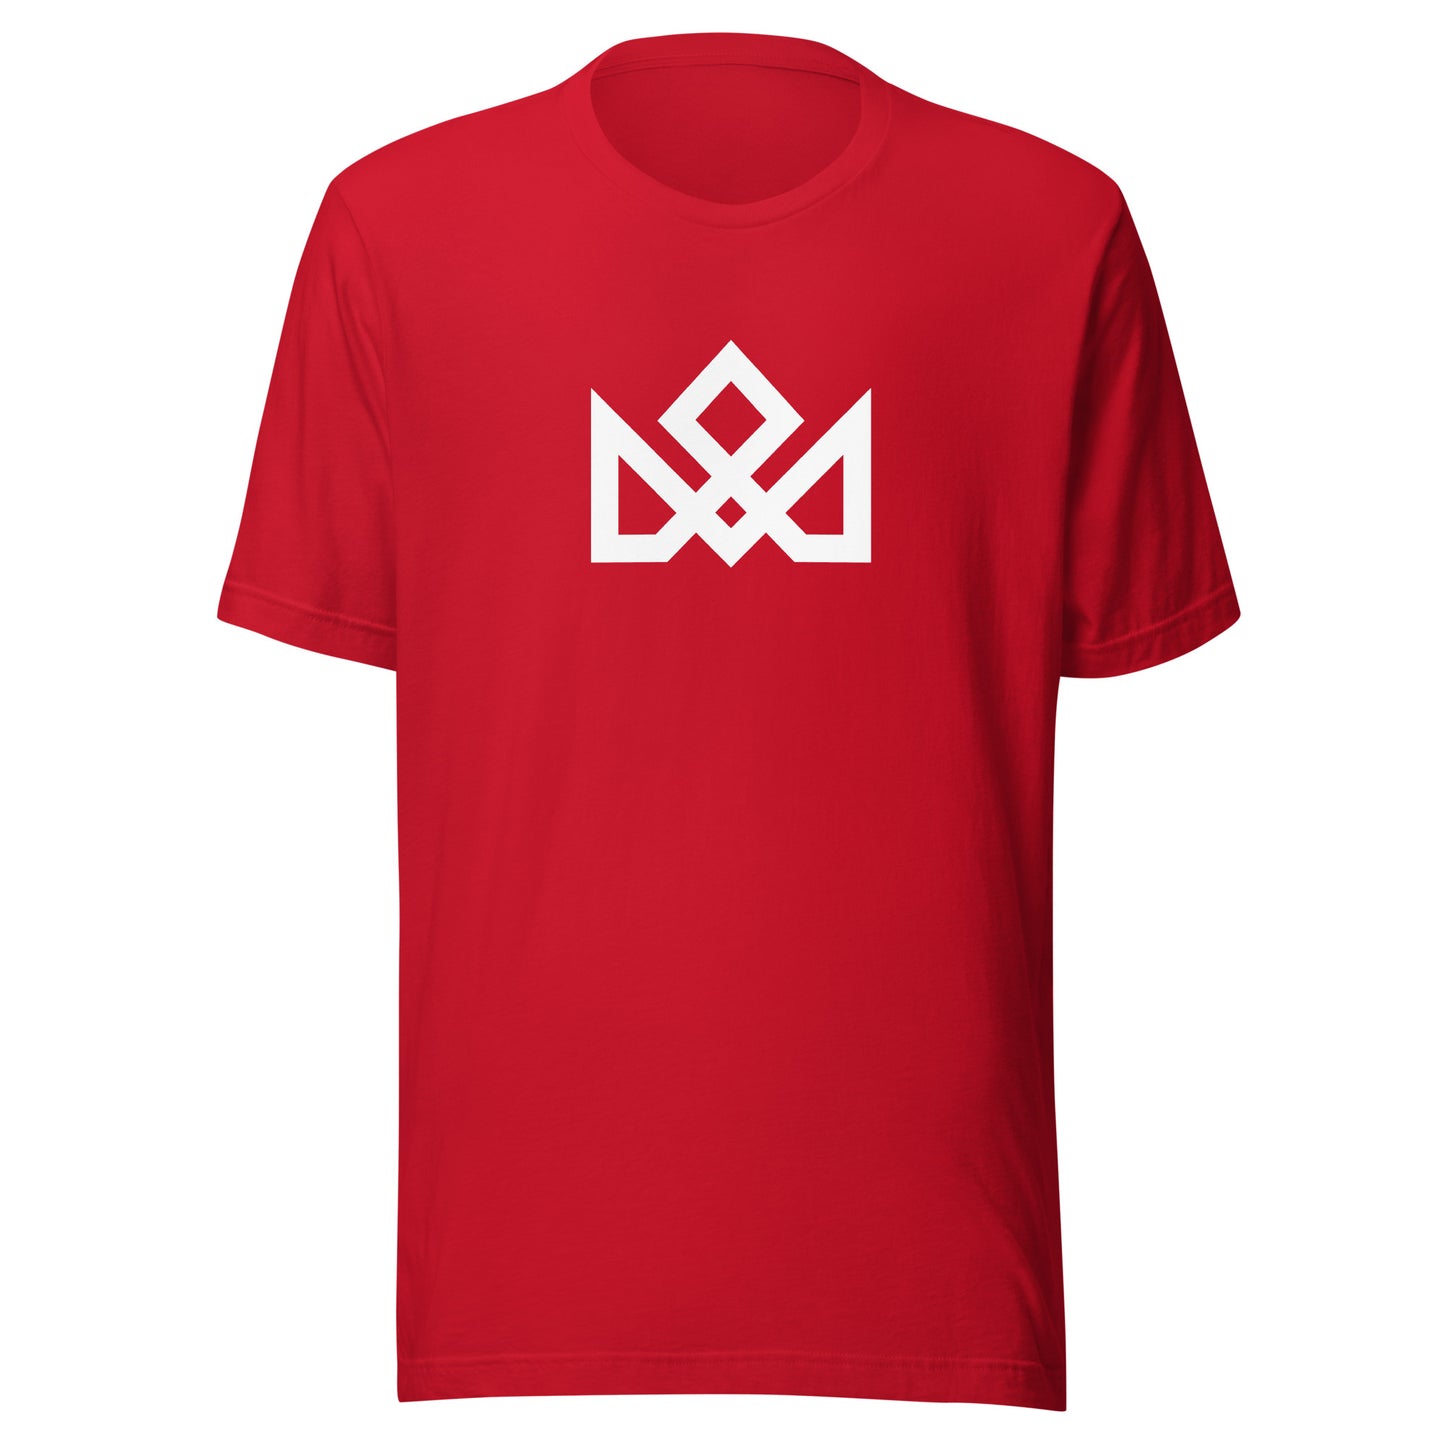 MADISON SYMBOL T-Shirt ( Black Symbol )